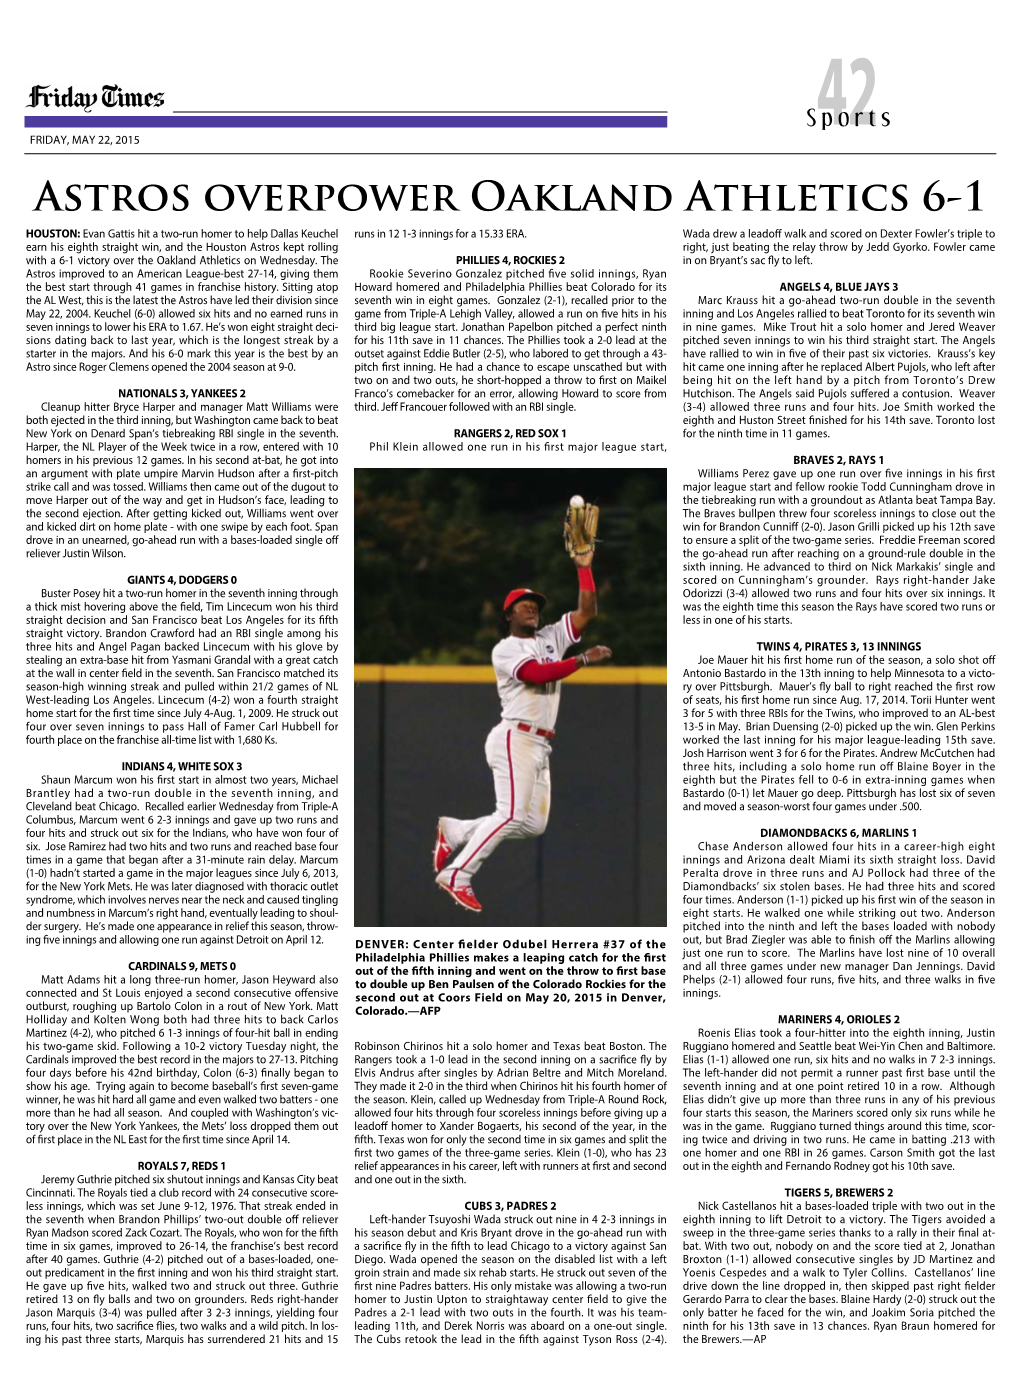 Astros Overpower Oakland Athletics 6-1